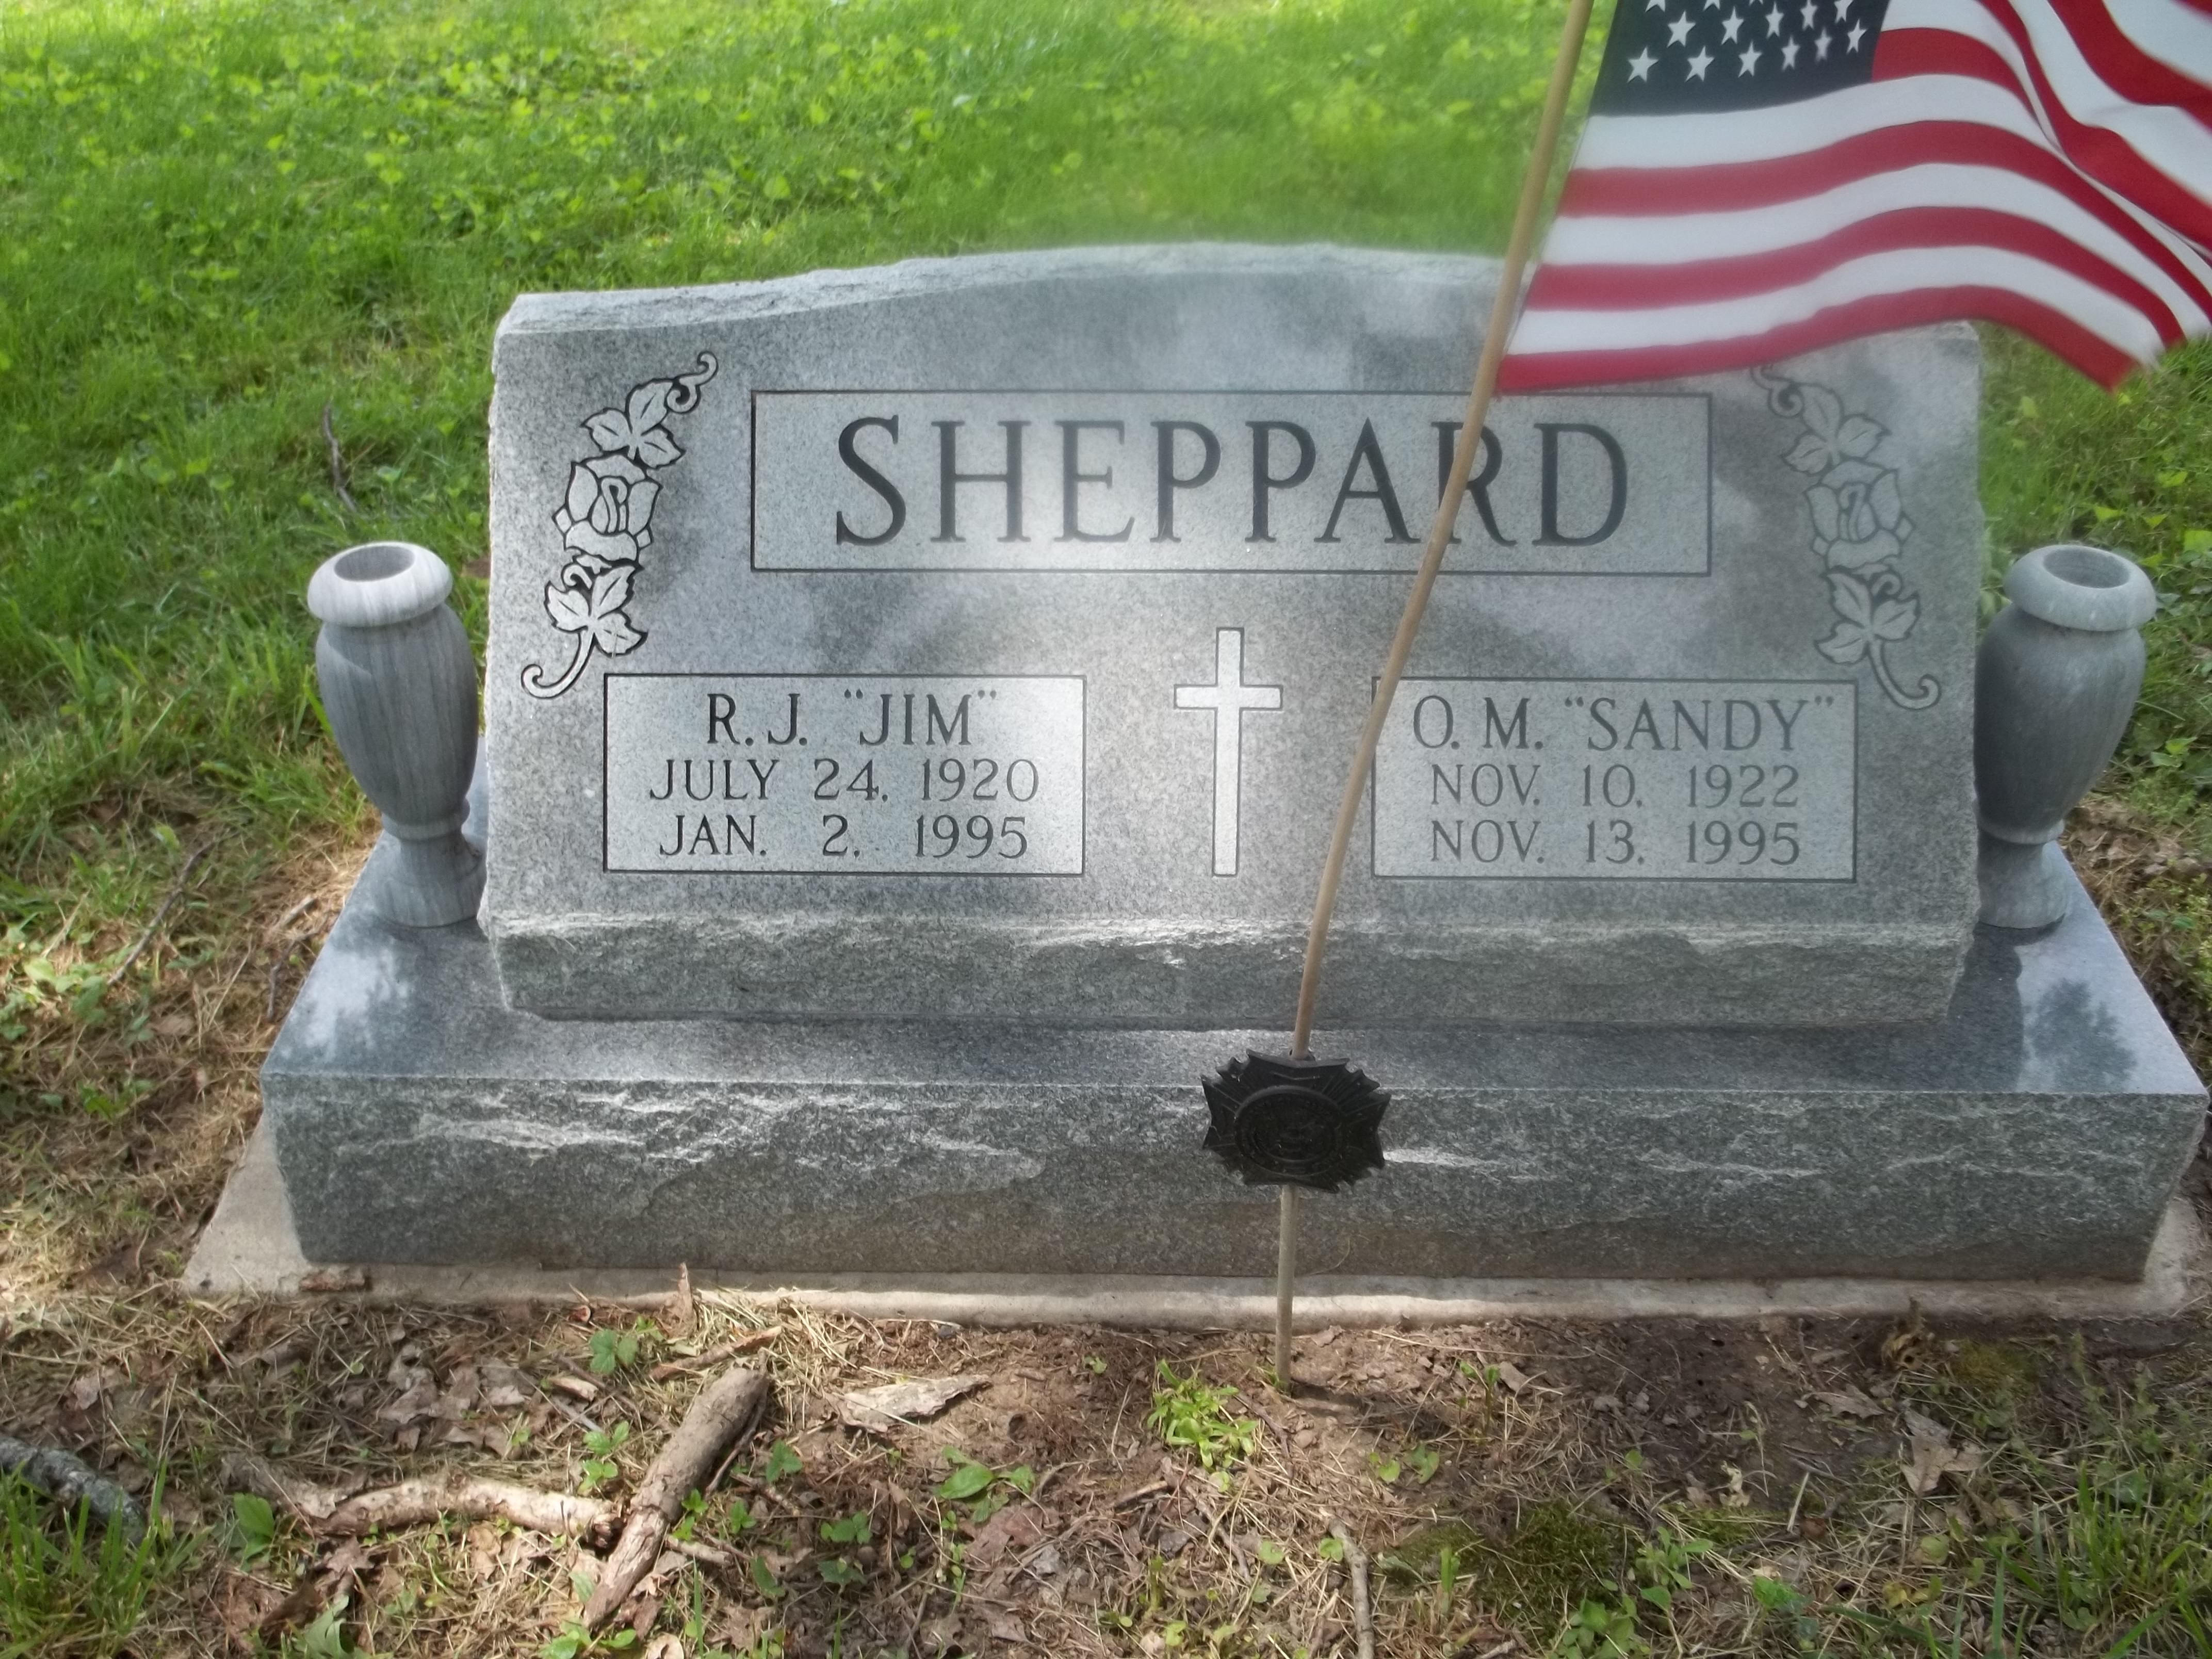 R. J. Jim and O. M. Sandy Sheppard  Headstone